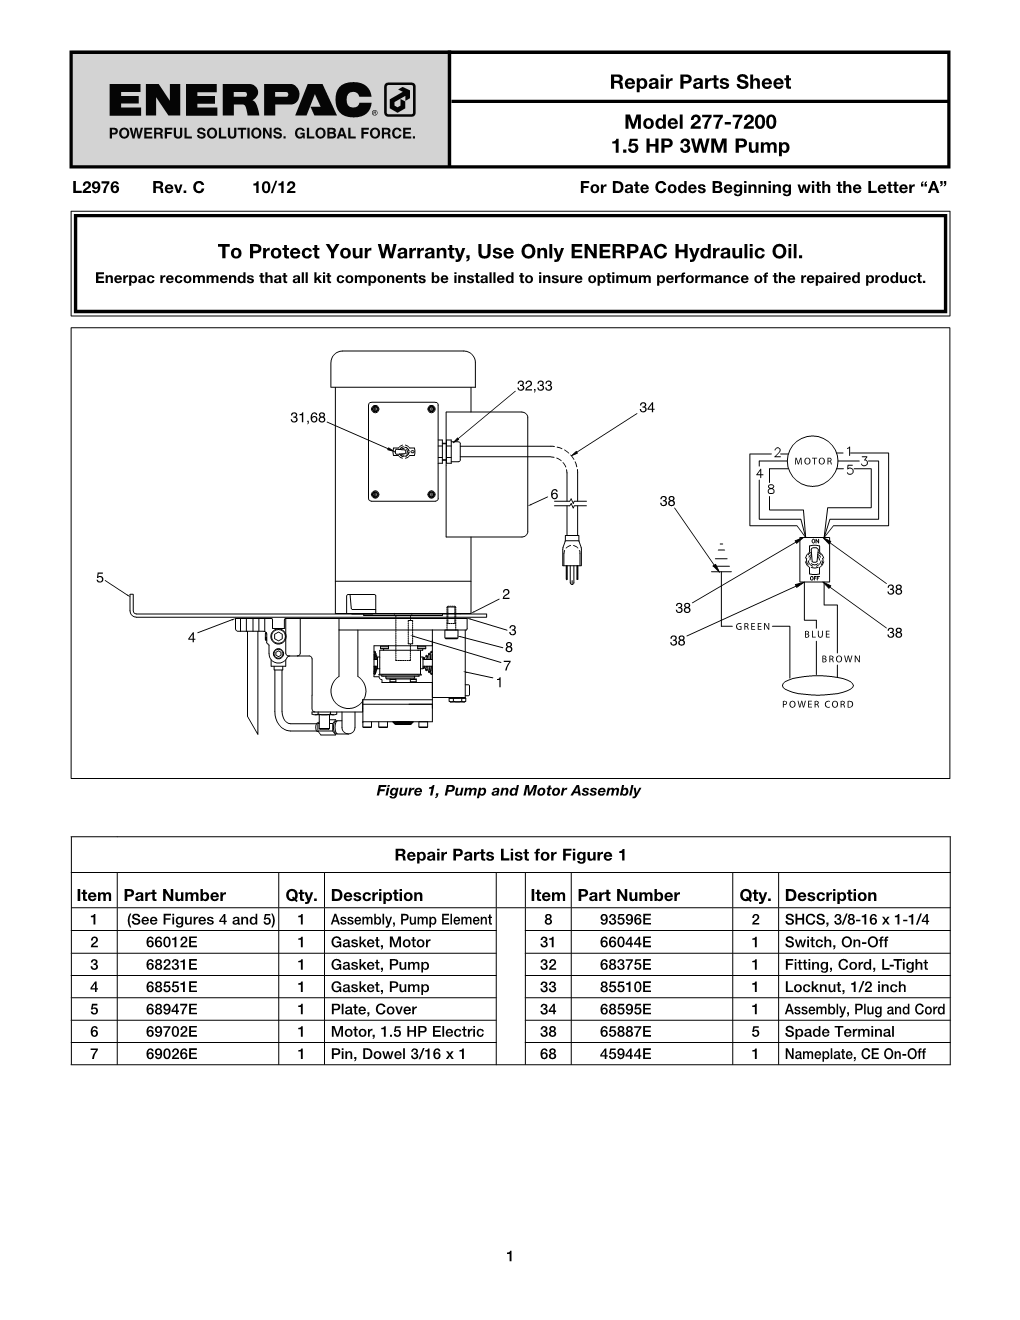 Repair Parts Sheet Model 277-7200 1.5 HP 3WM Pump To